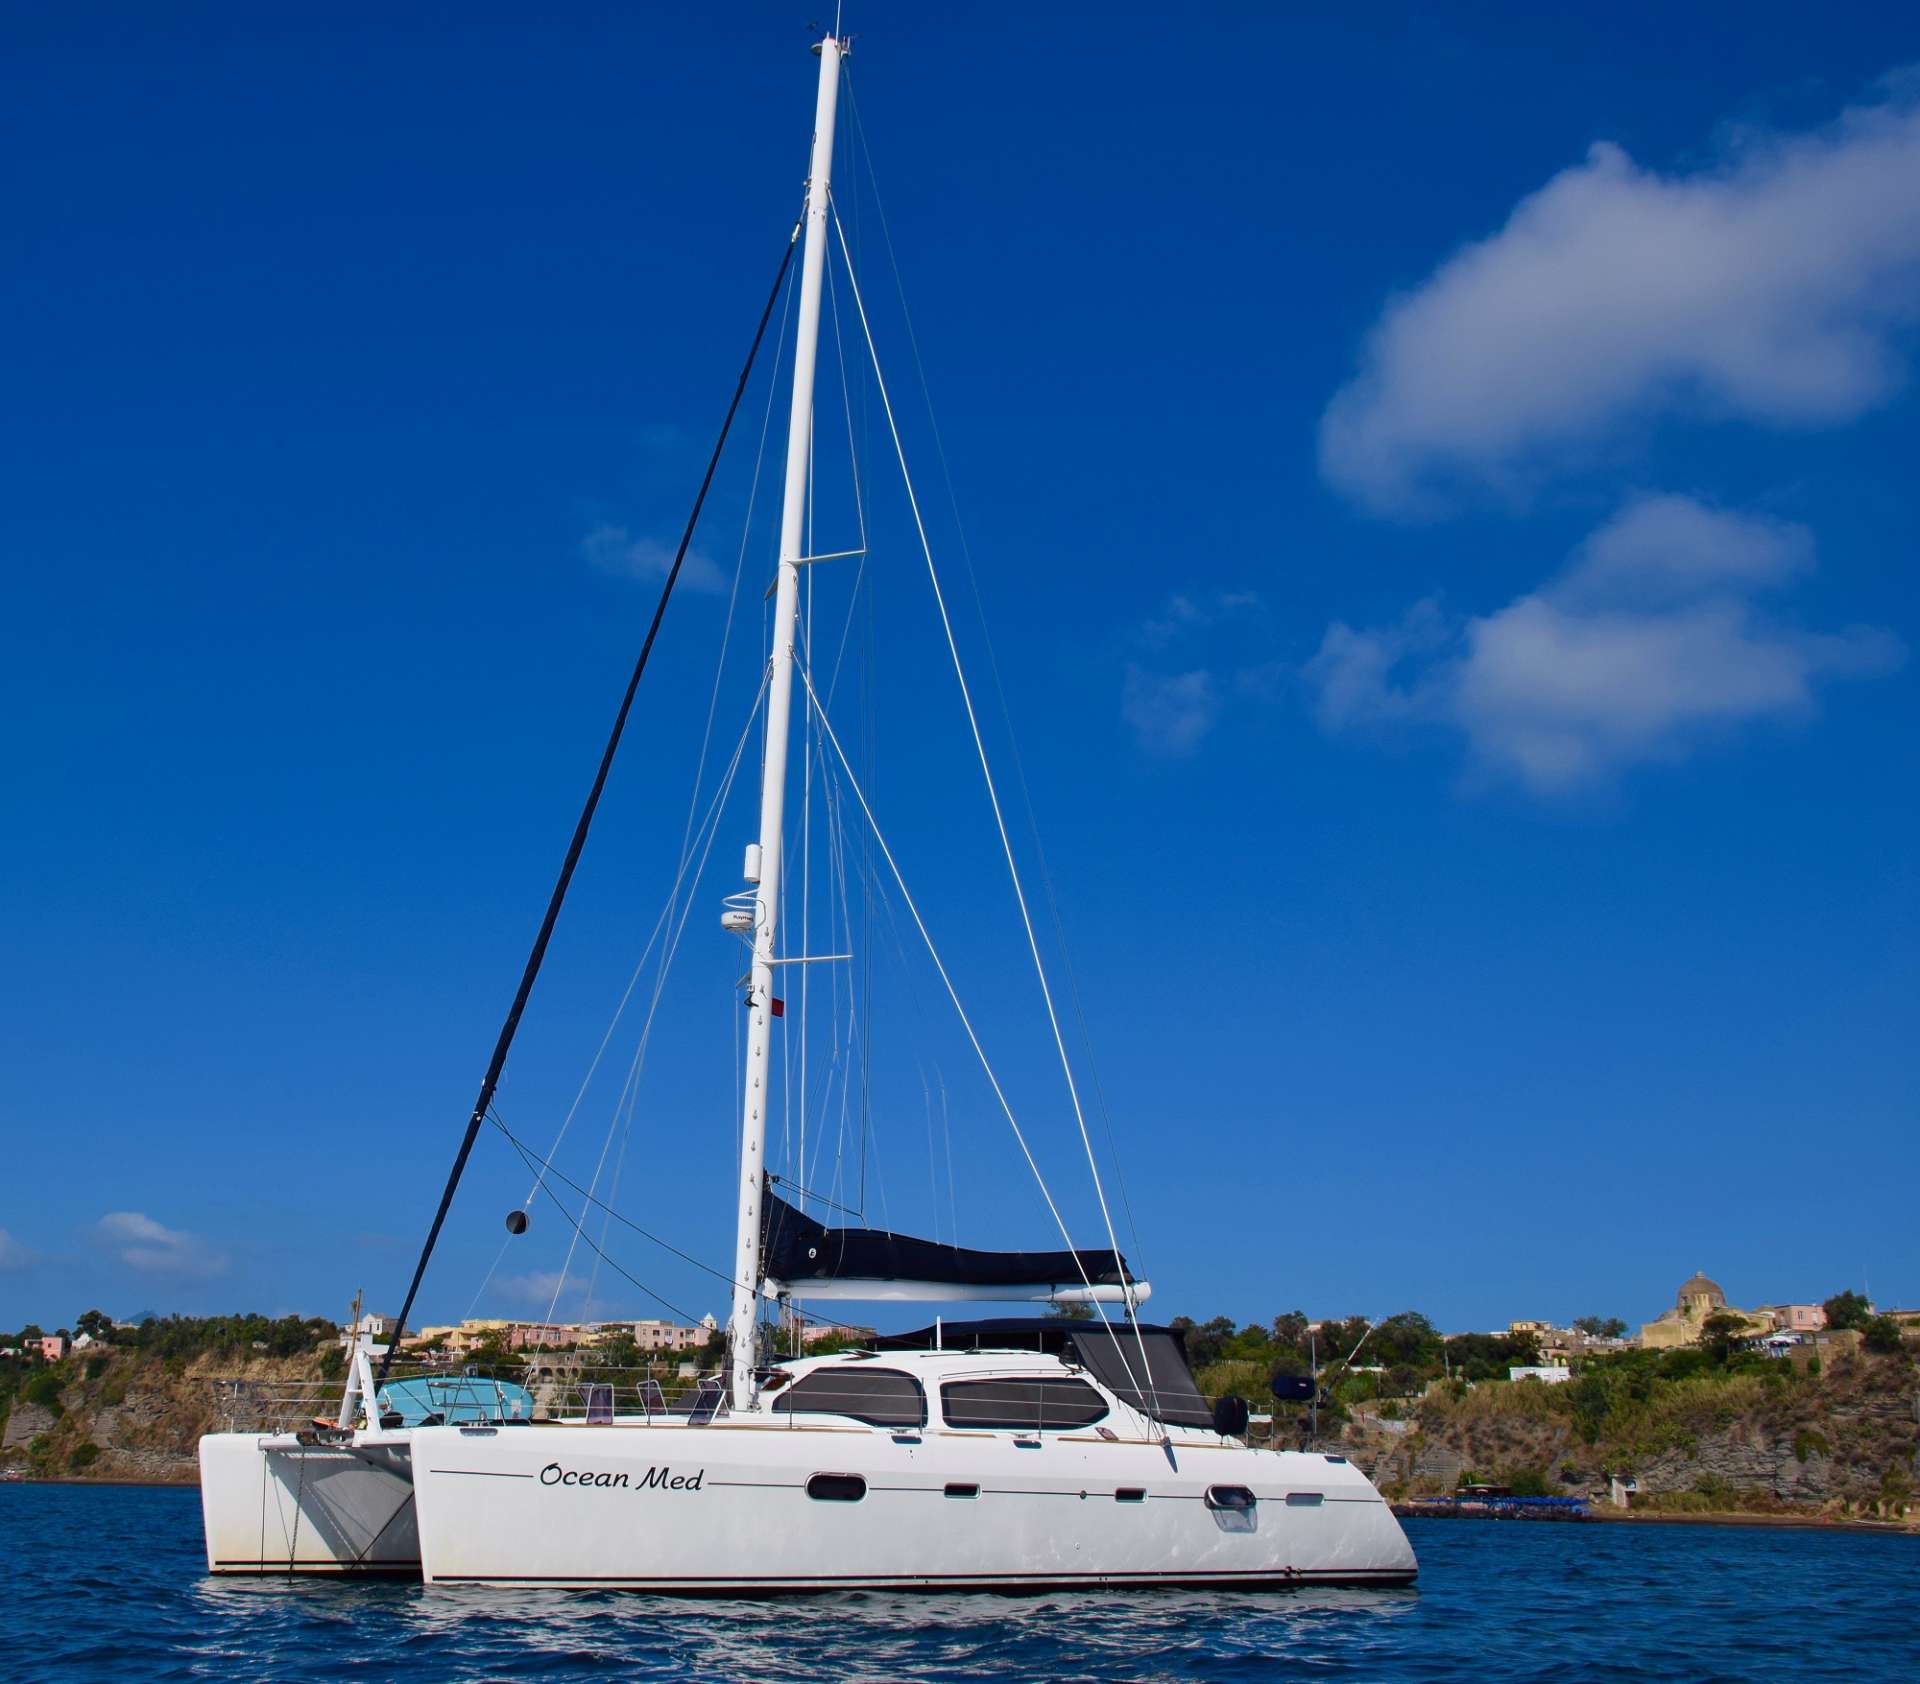 ocean med - Yacht Charter Cogolin & Boat hire in Fr. Riviera, Corsica & Sardinia 1